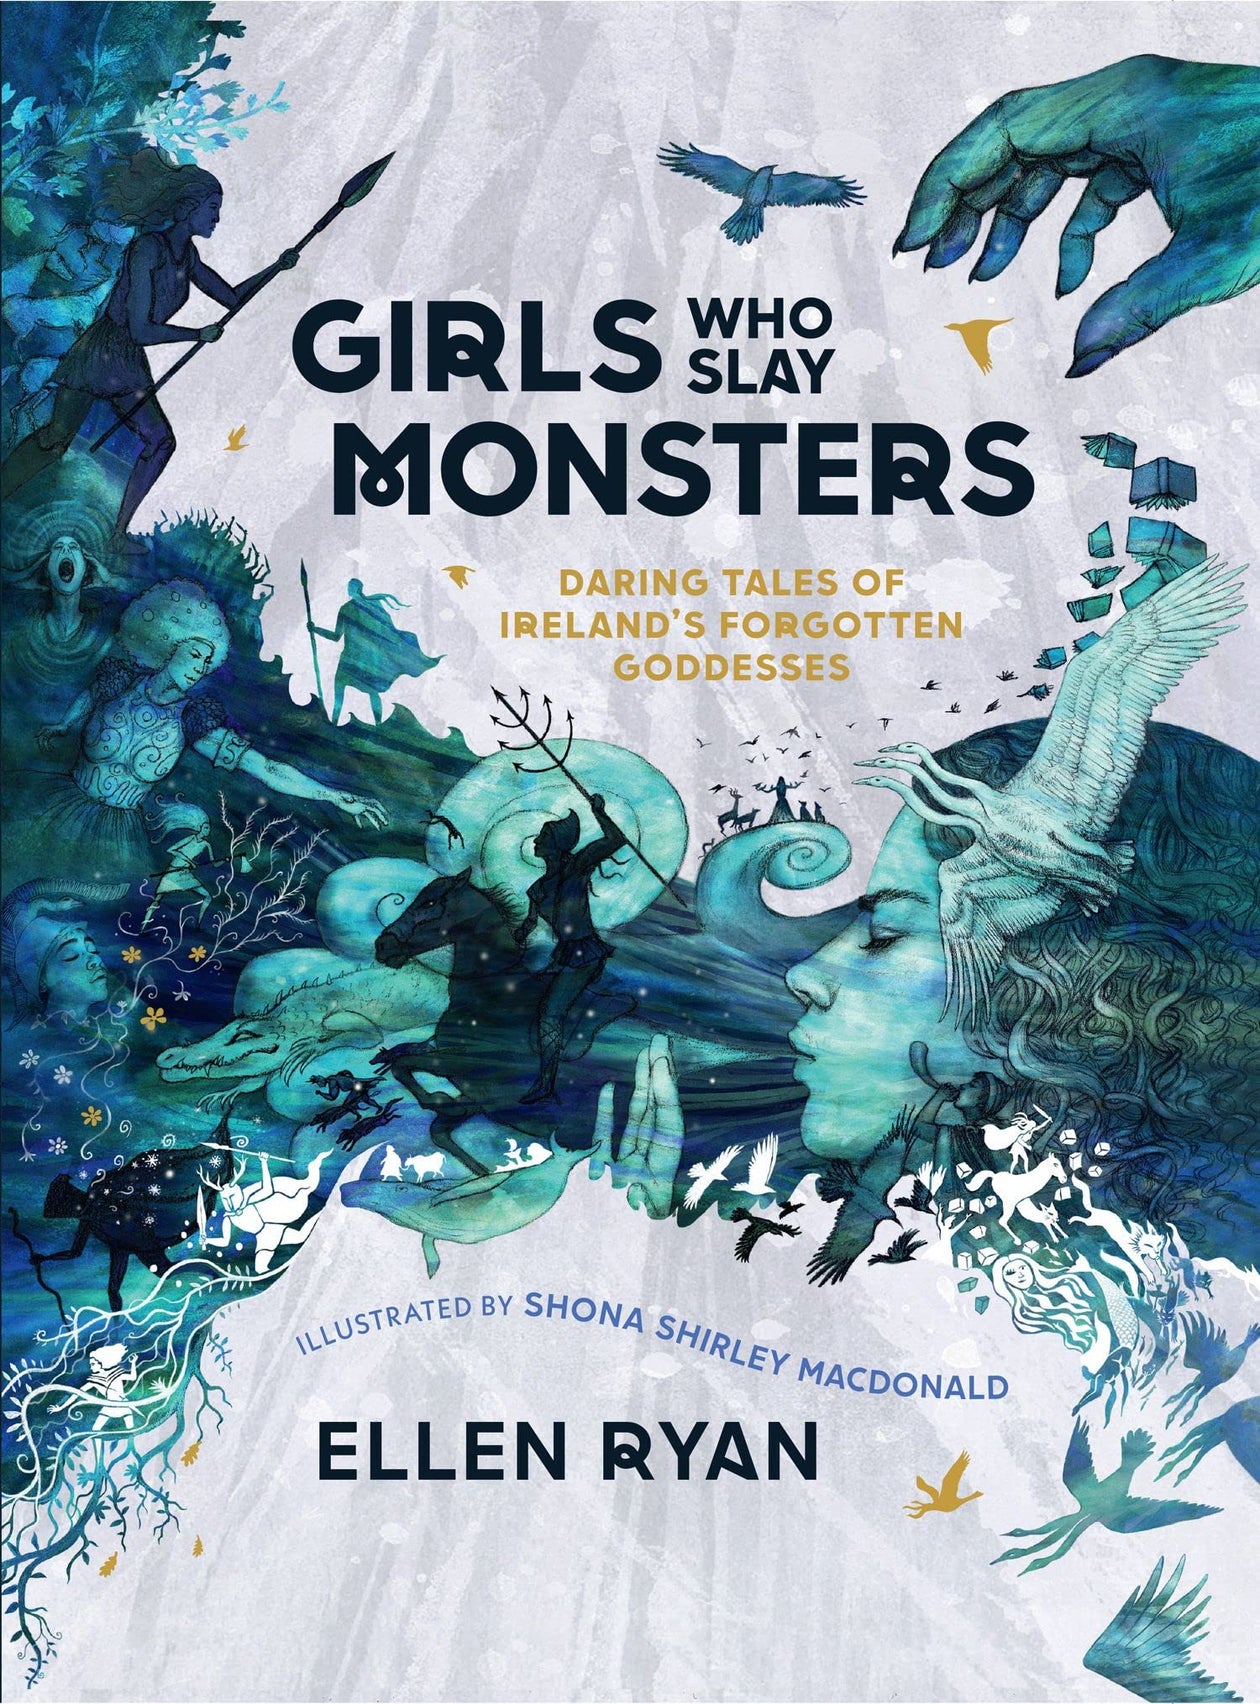 Girls Who Slay Monsters by Ellen Ryan, illustrated by Shona Shirley Macdonald